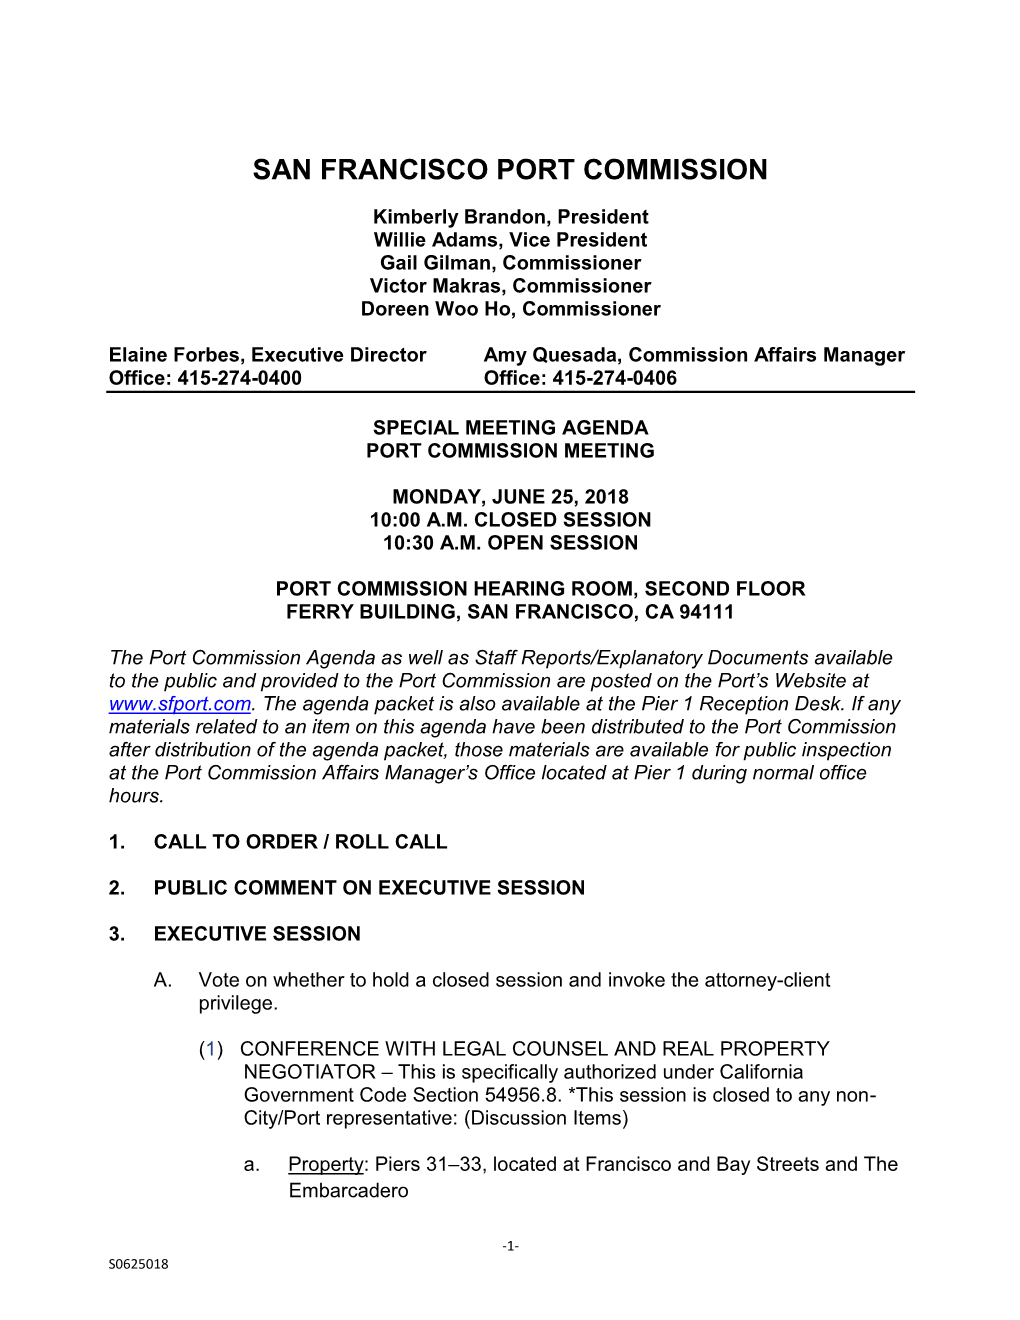 San Francisco Port Commission